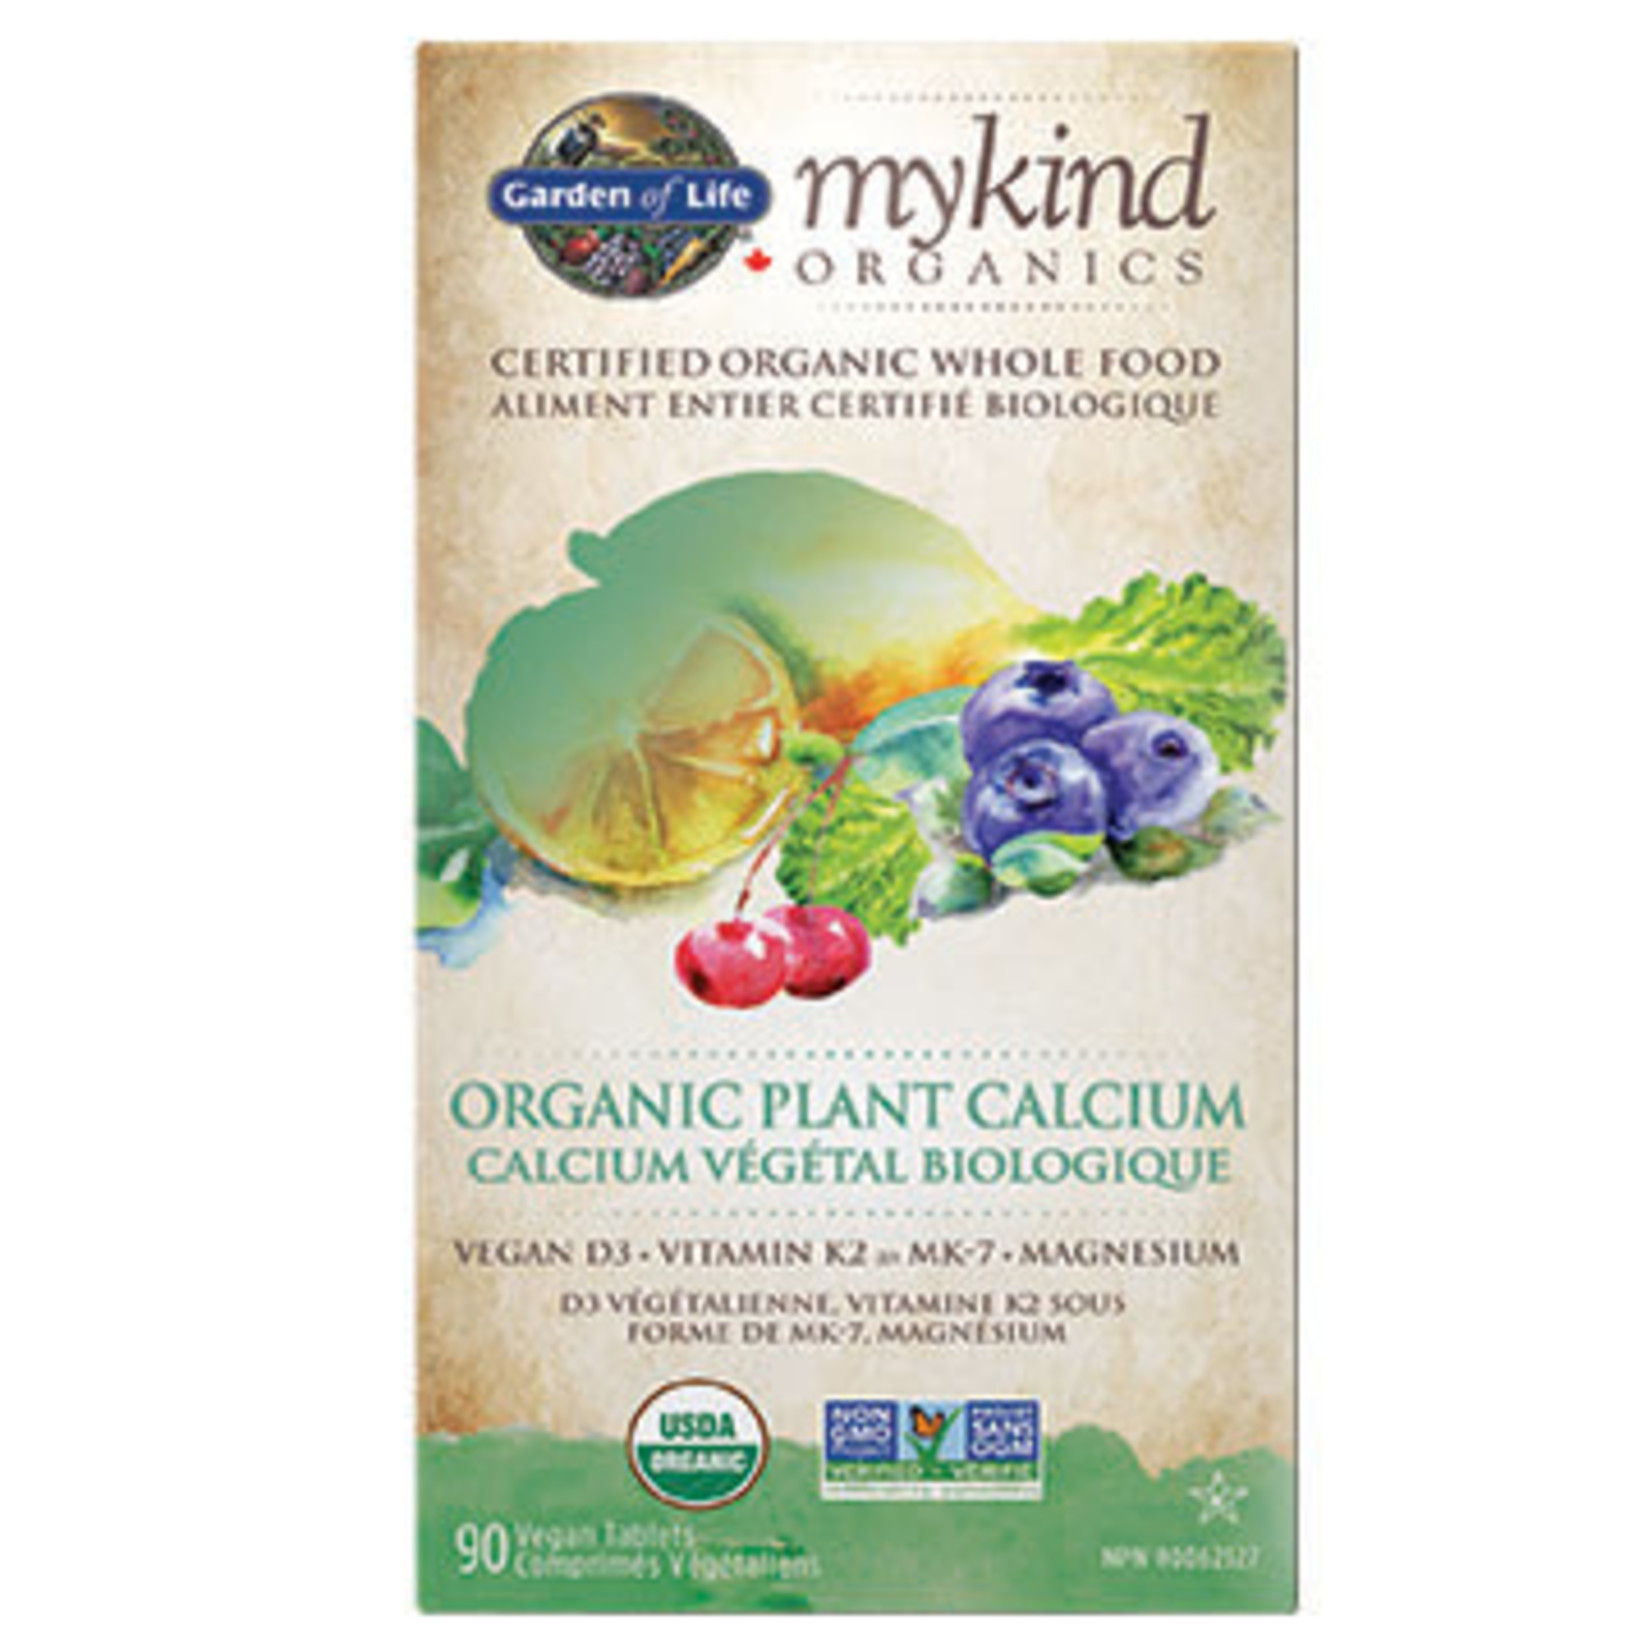 GARDEN OF LIFE GARDEN OF LIFE MYKIND ORGANICS - ORGANIC PLANT CALCIUM 90 VT